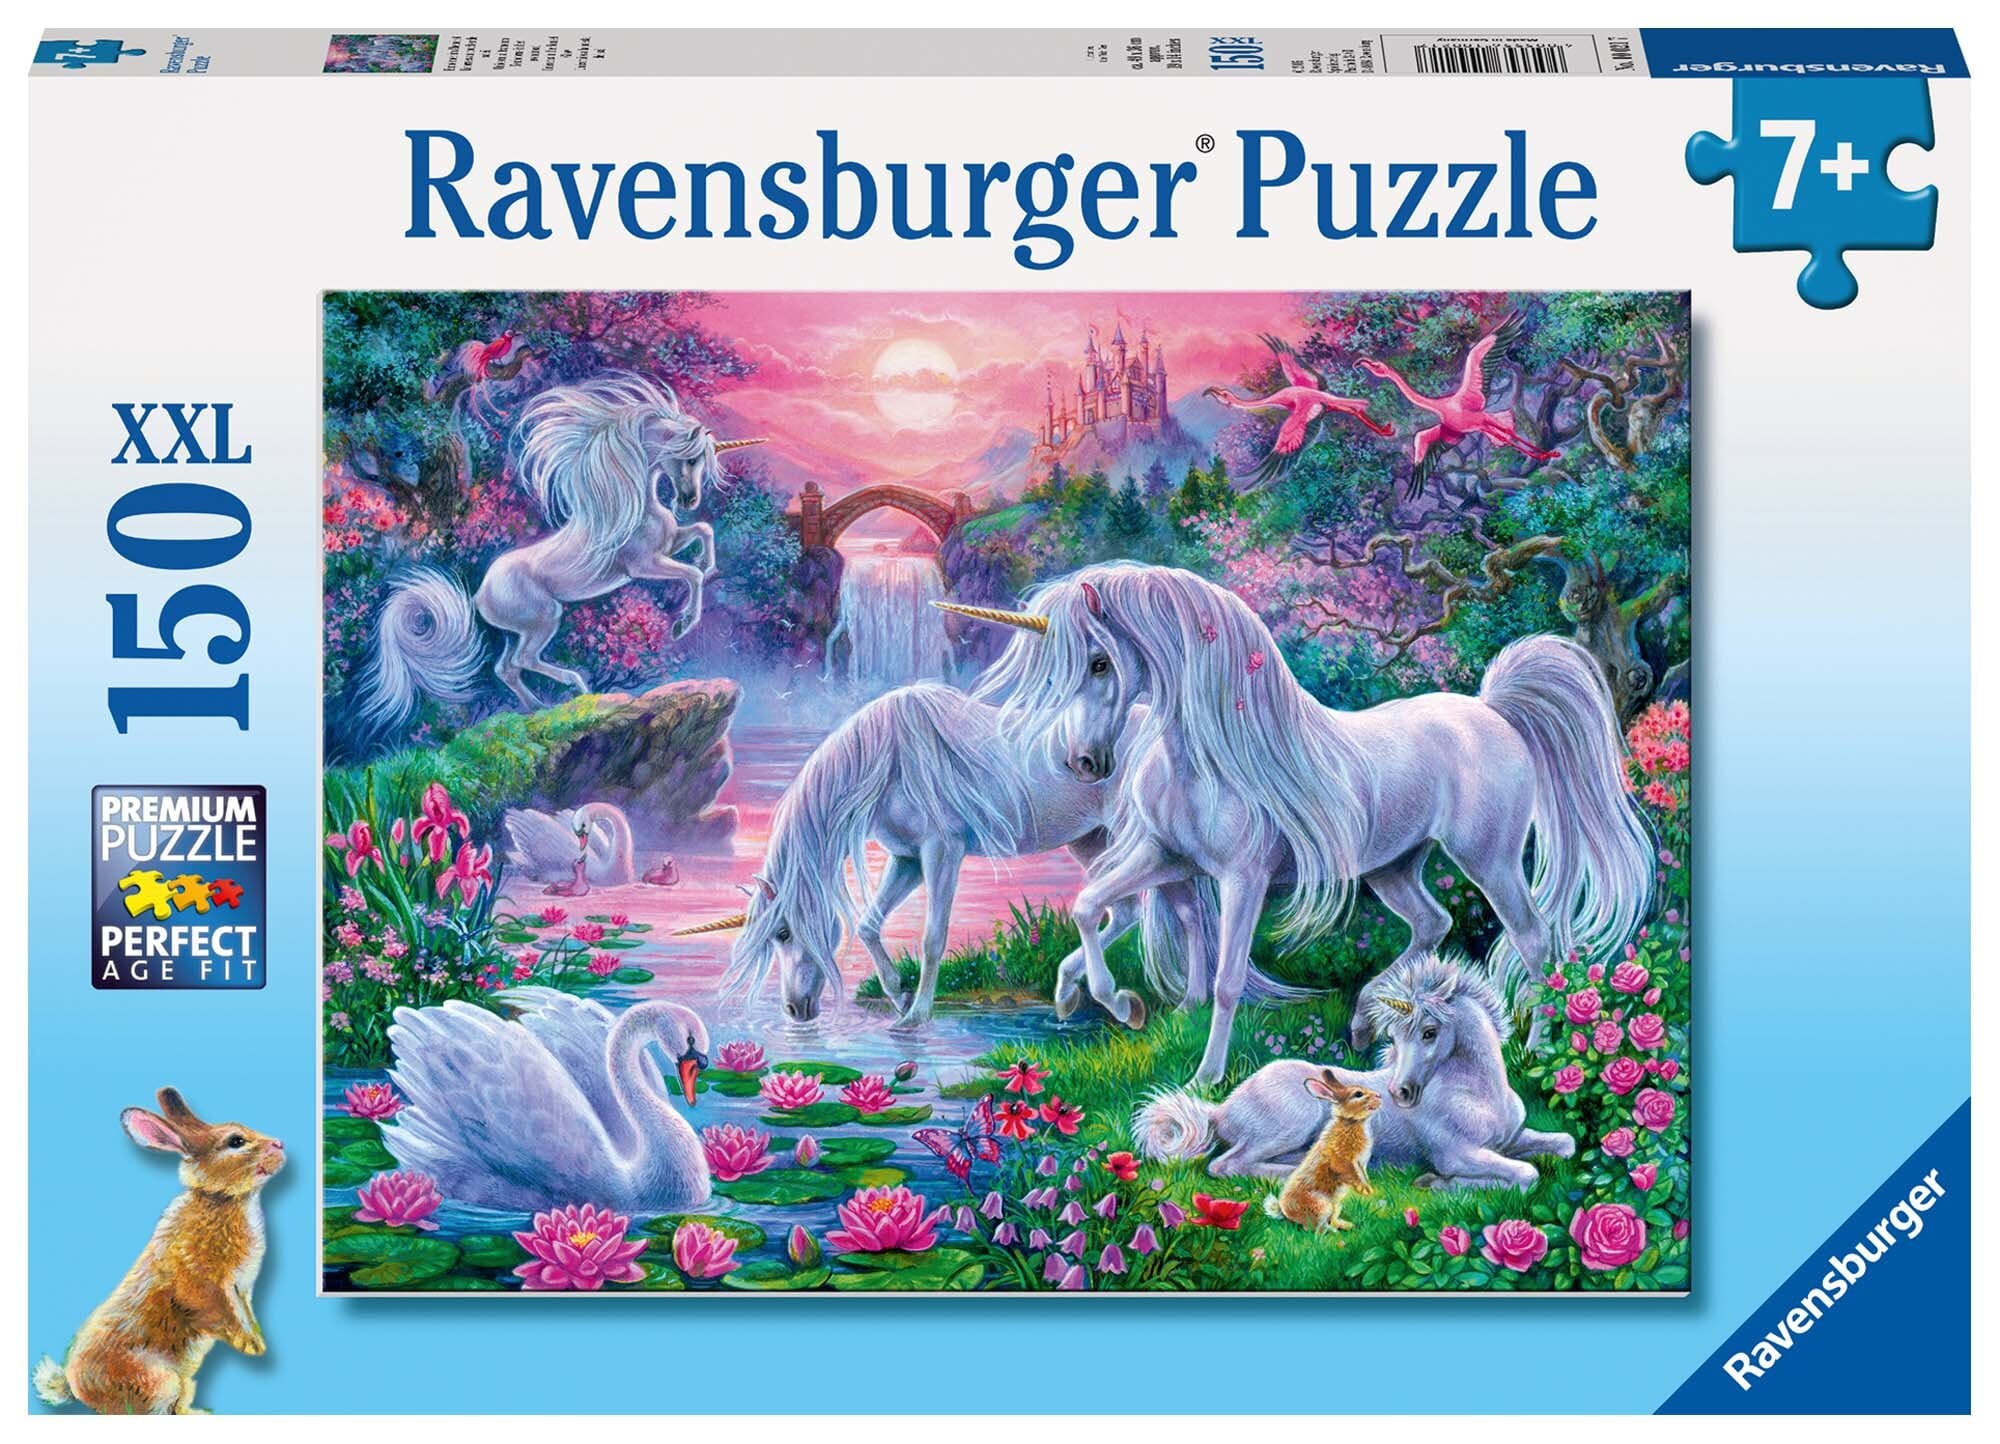 Ravensburger Puzzle - Einhörner im Abendrot 150 Teile XXL